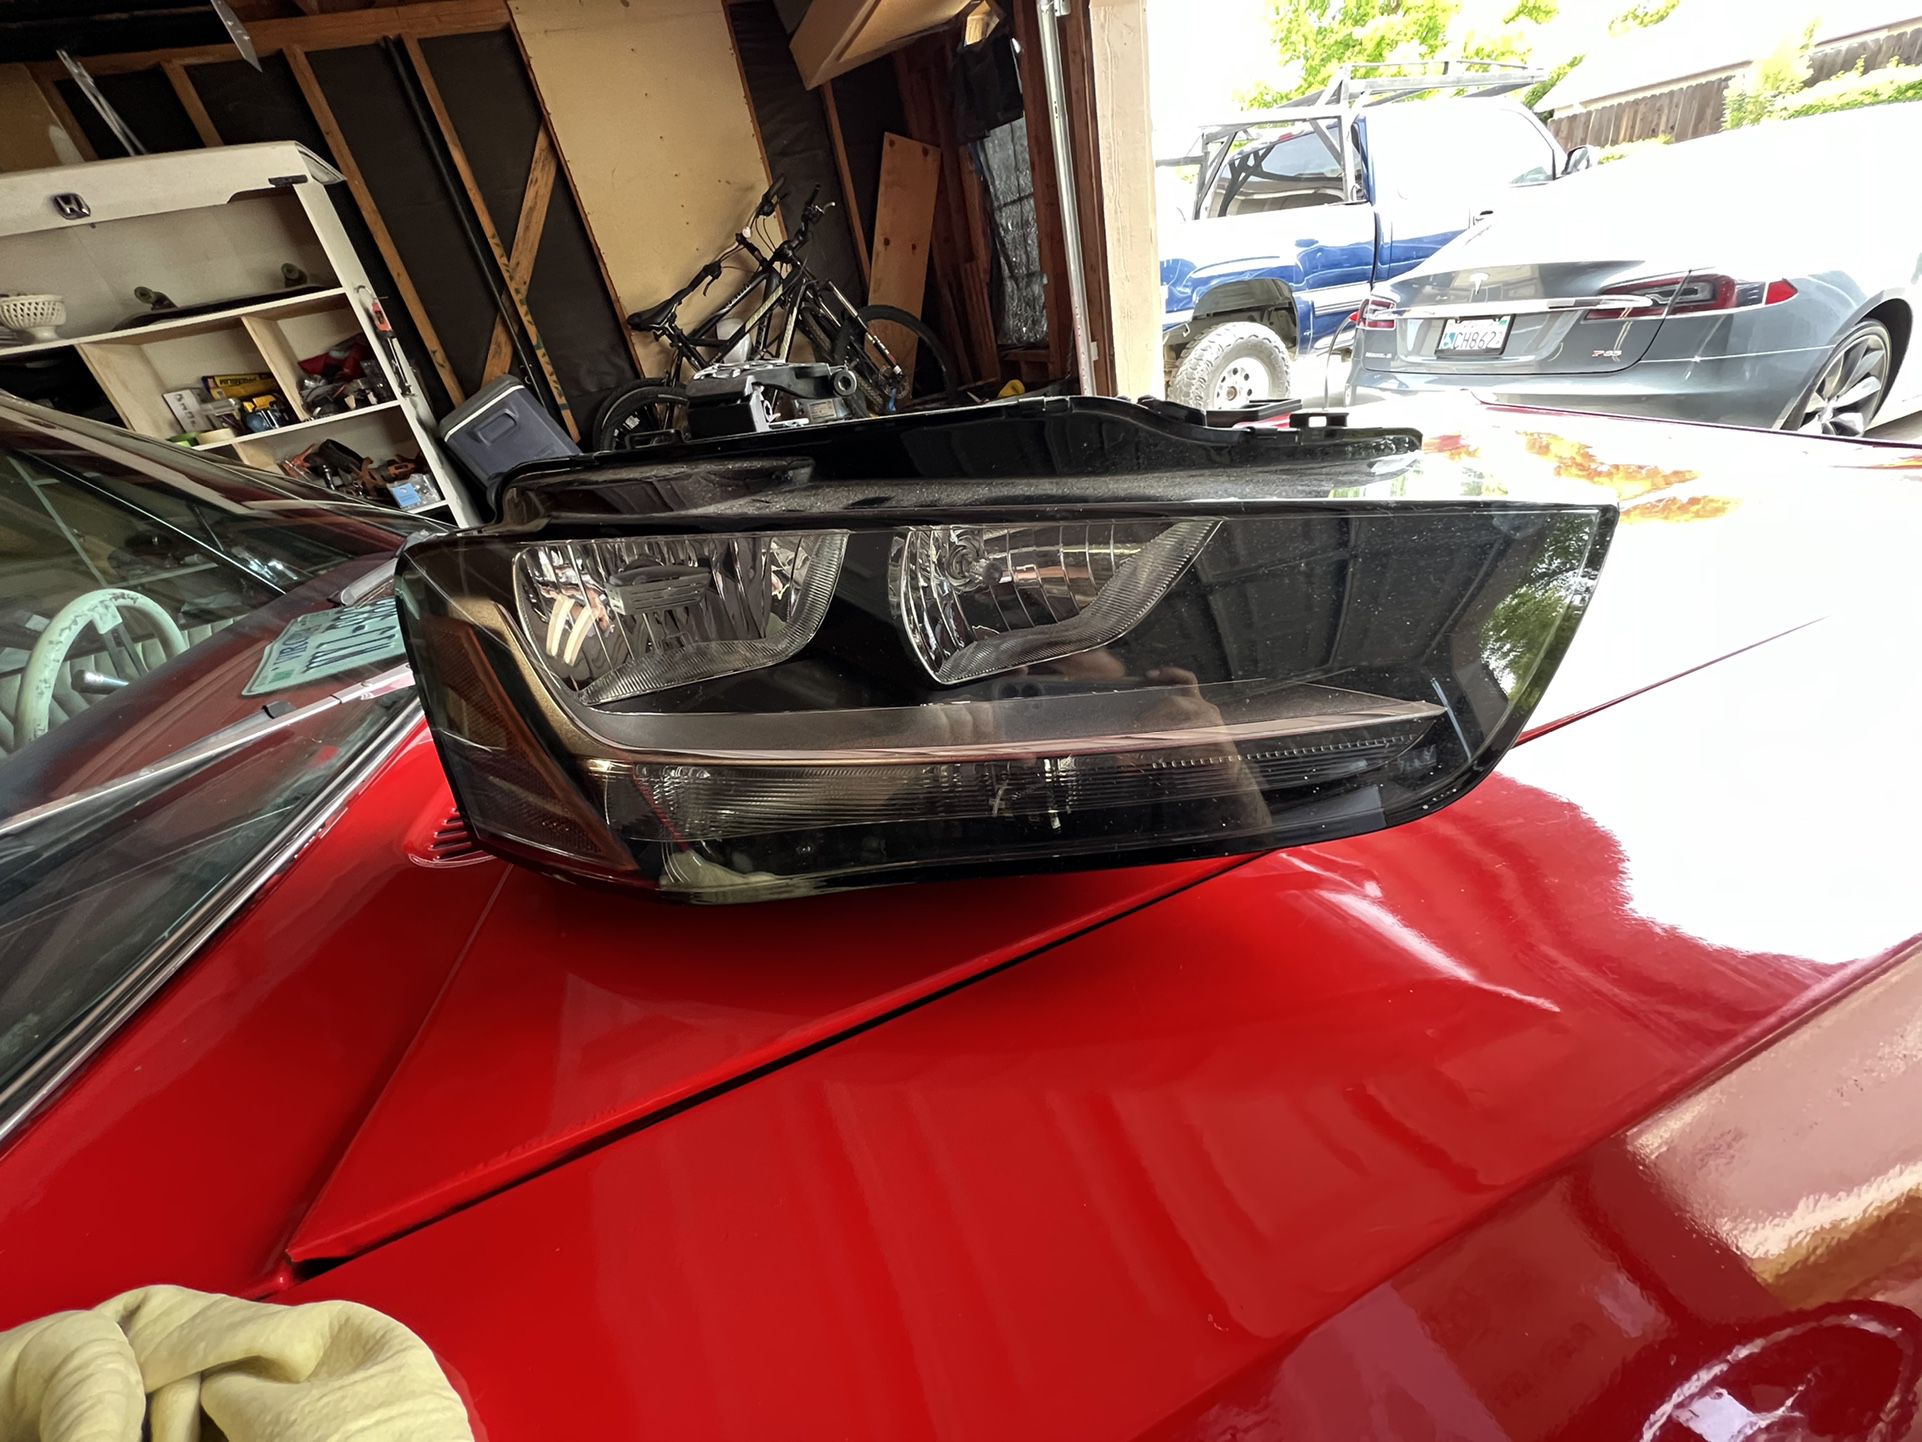  2014 Audi A4 Headlights